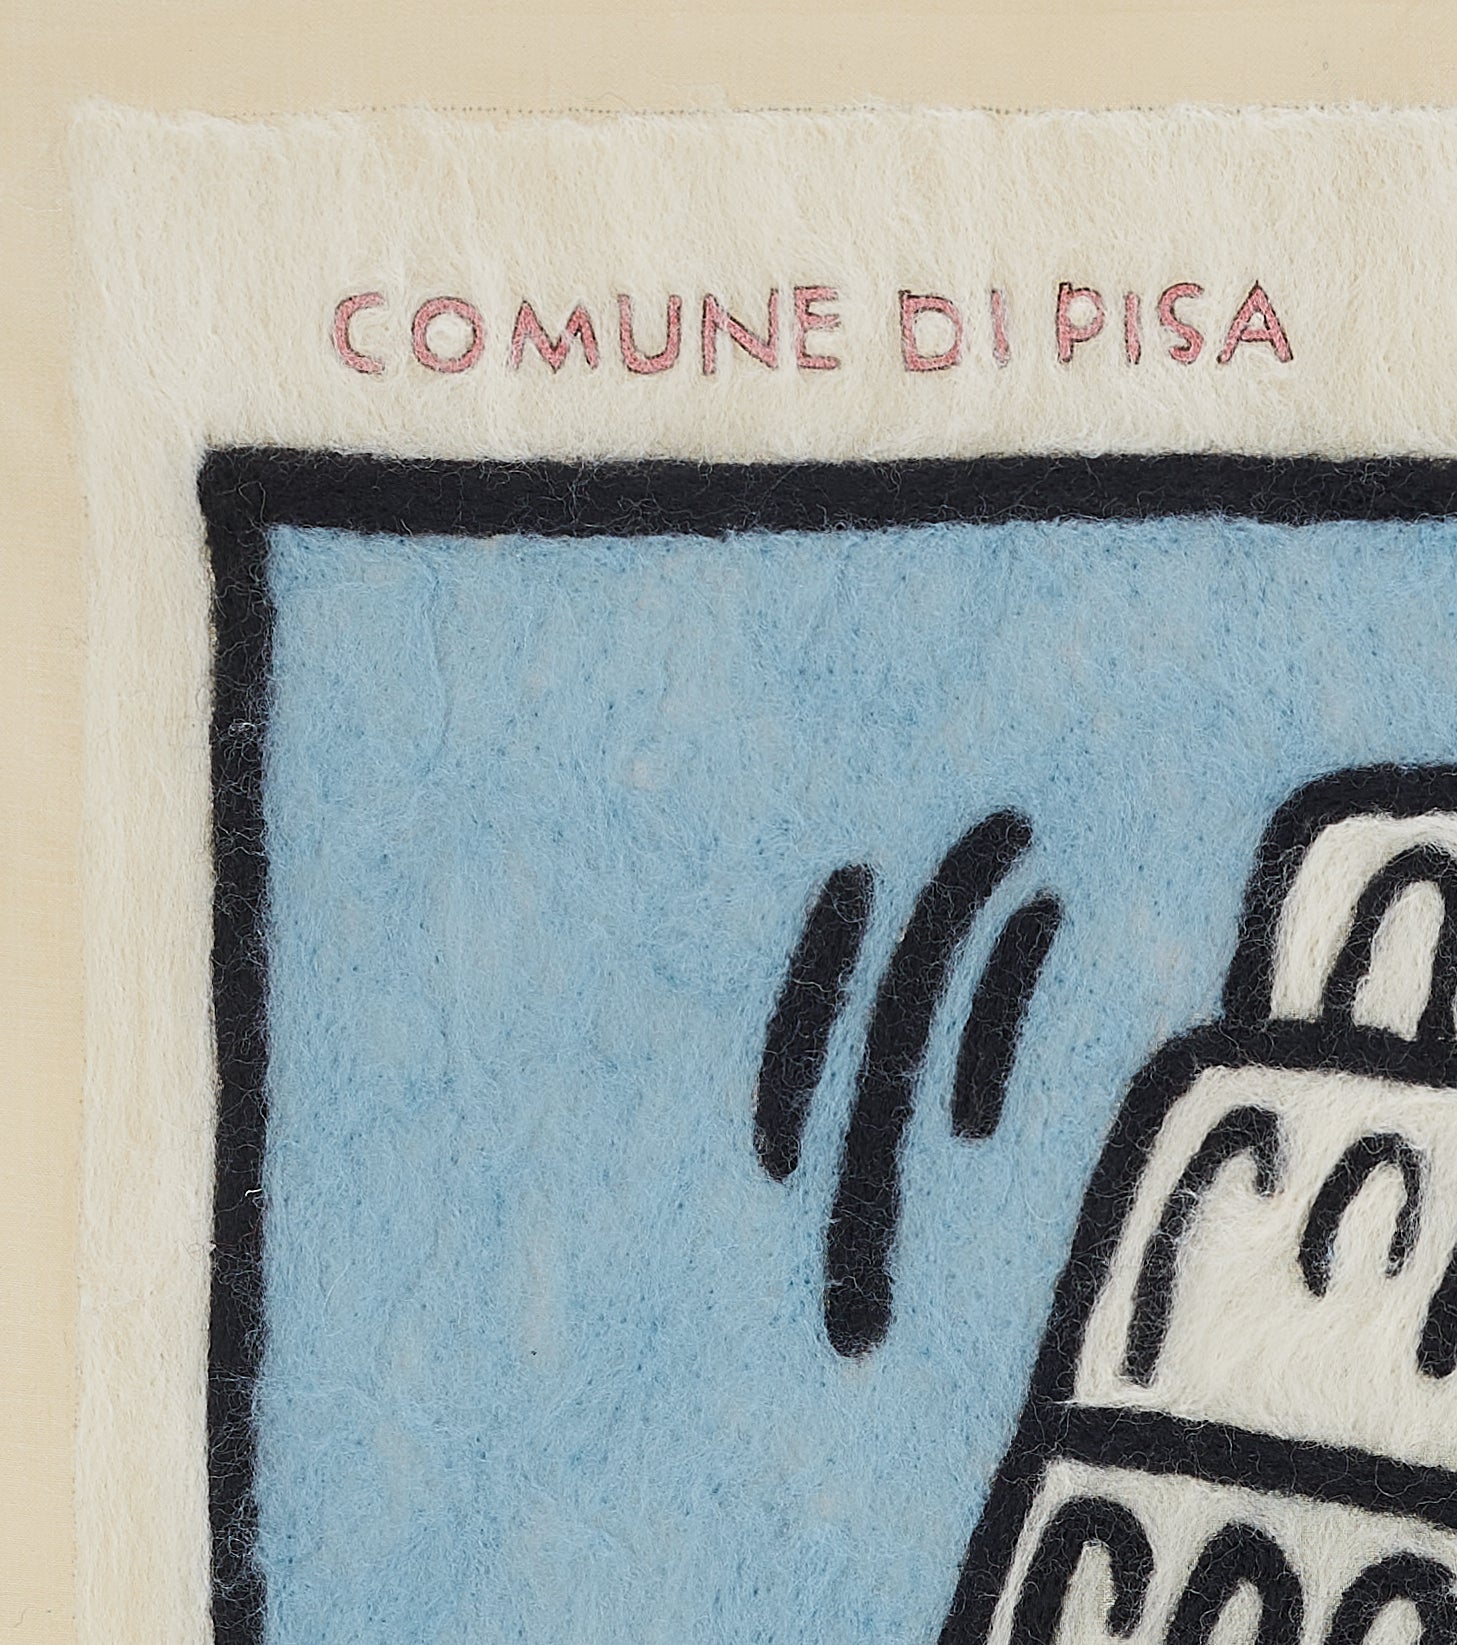 Haring @ Comune di Pisa, Edition of 10